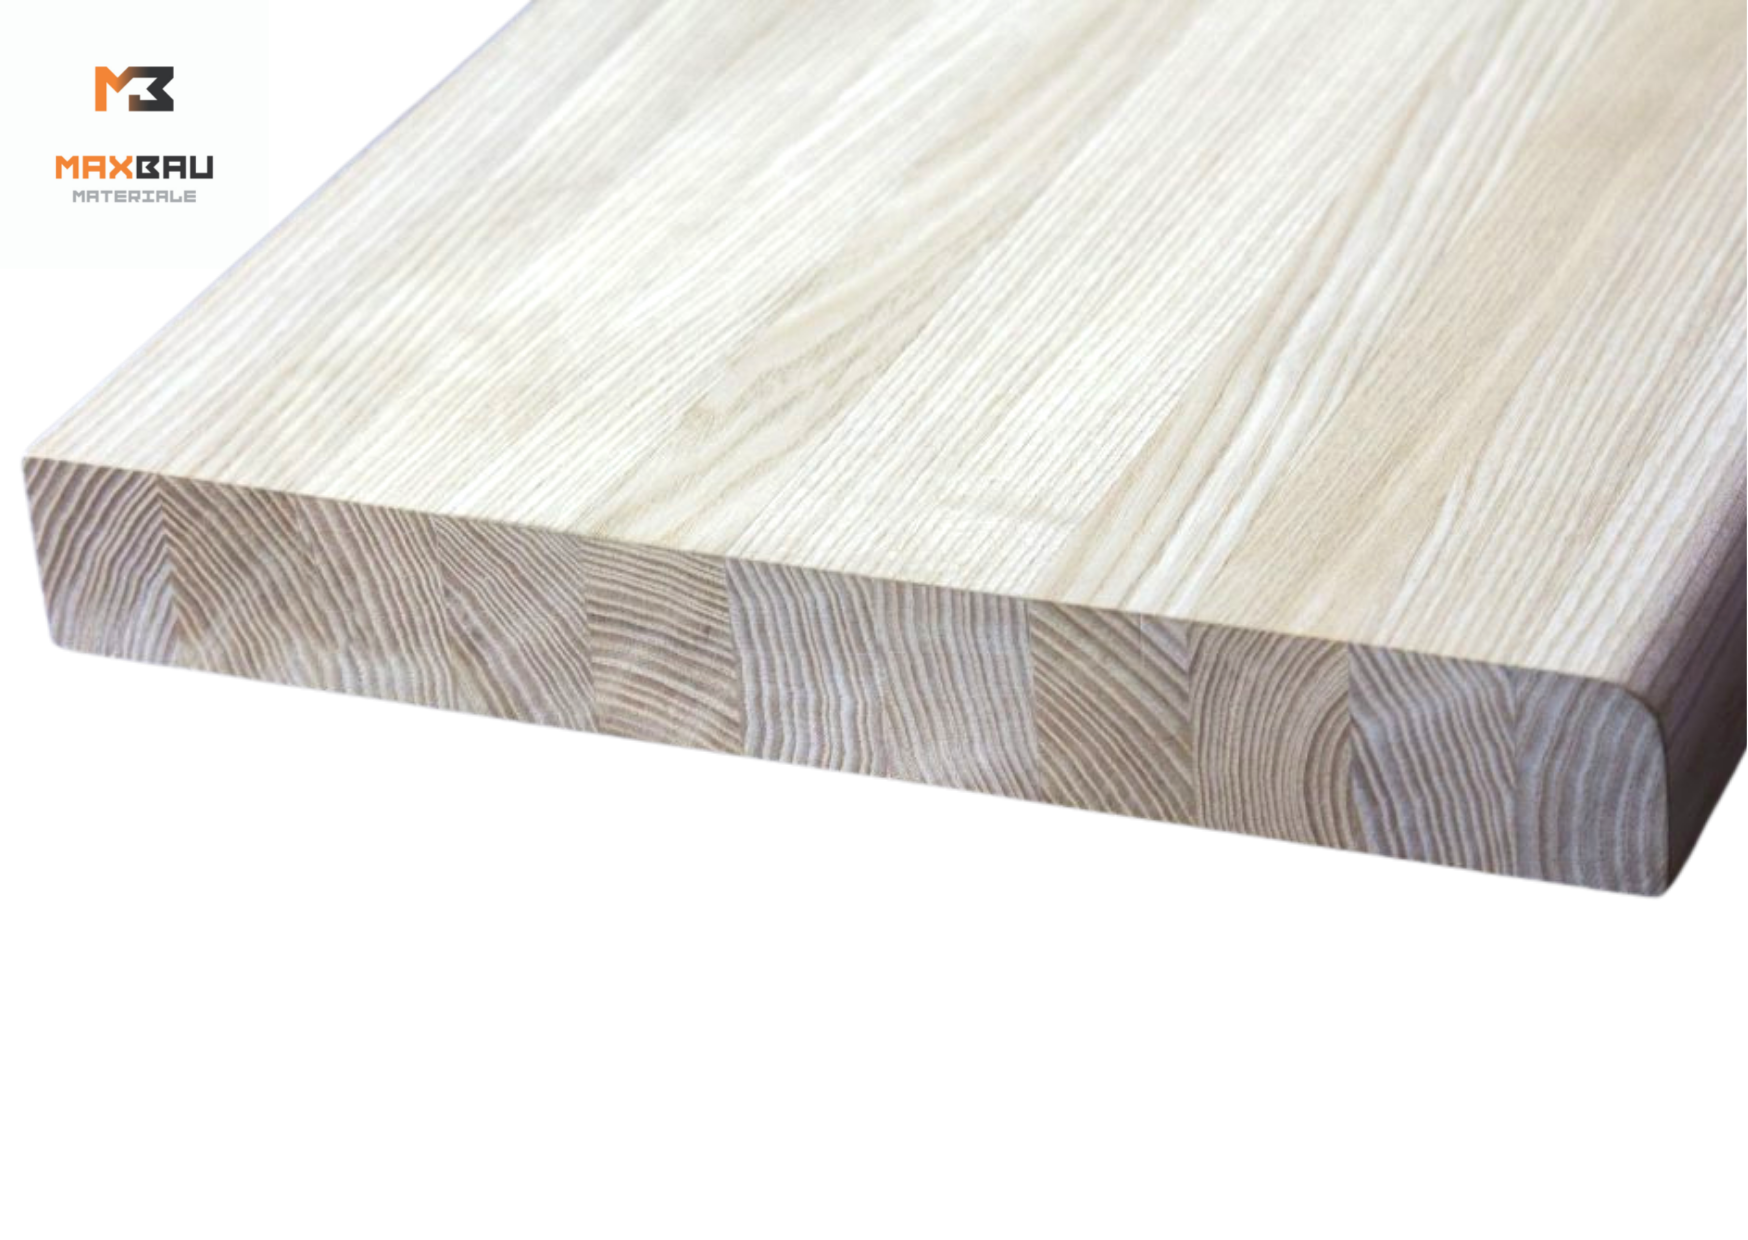 Placi din lemn incleiat - Placa de lemn incleiat MaxBau 800 x 400 x 28 mm Clasa AB, maxbau.ro